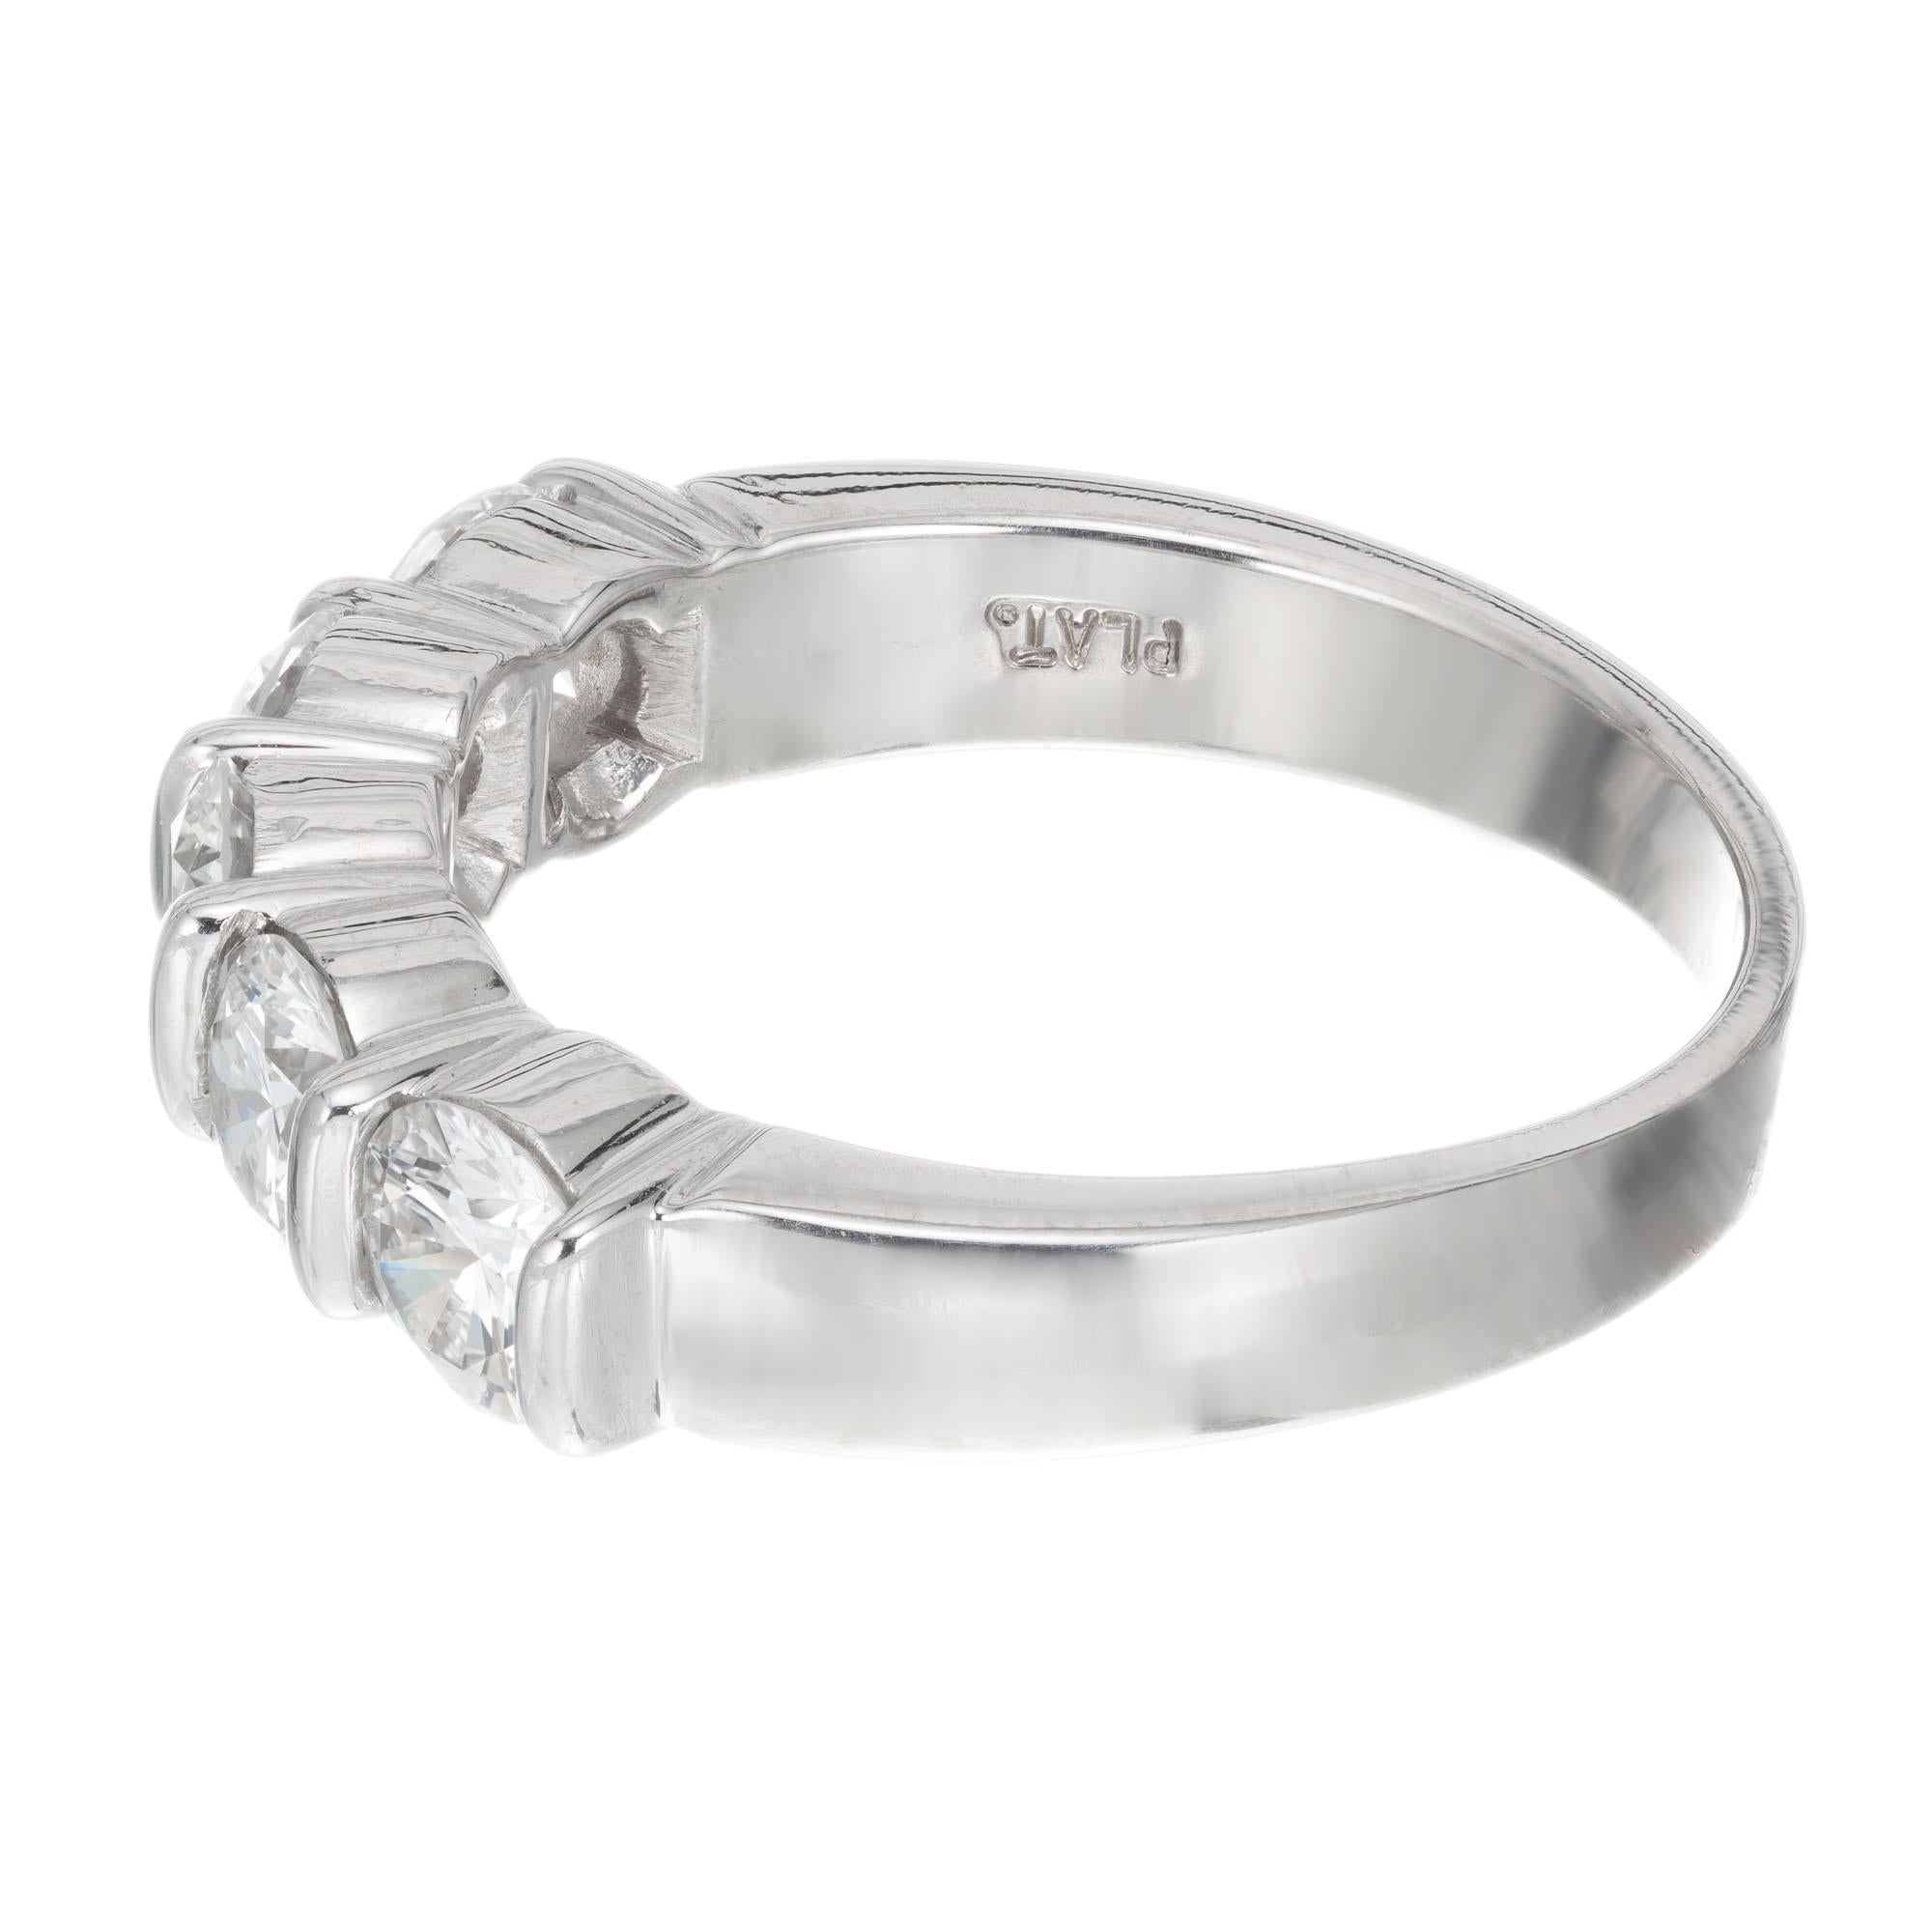 Round Cut Gemlok 1.75 Carat Diamond Platinum Wedding Band Ring